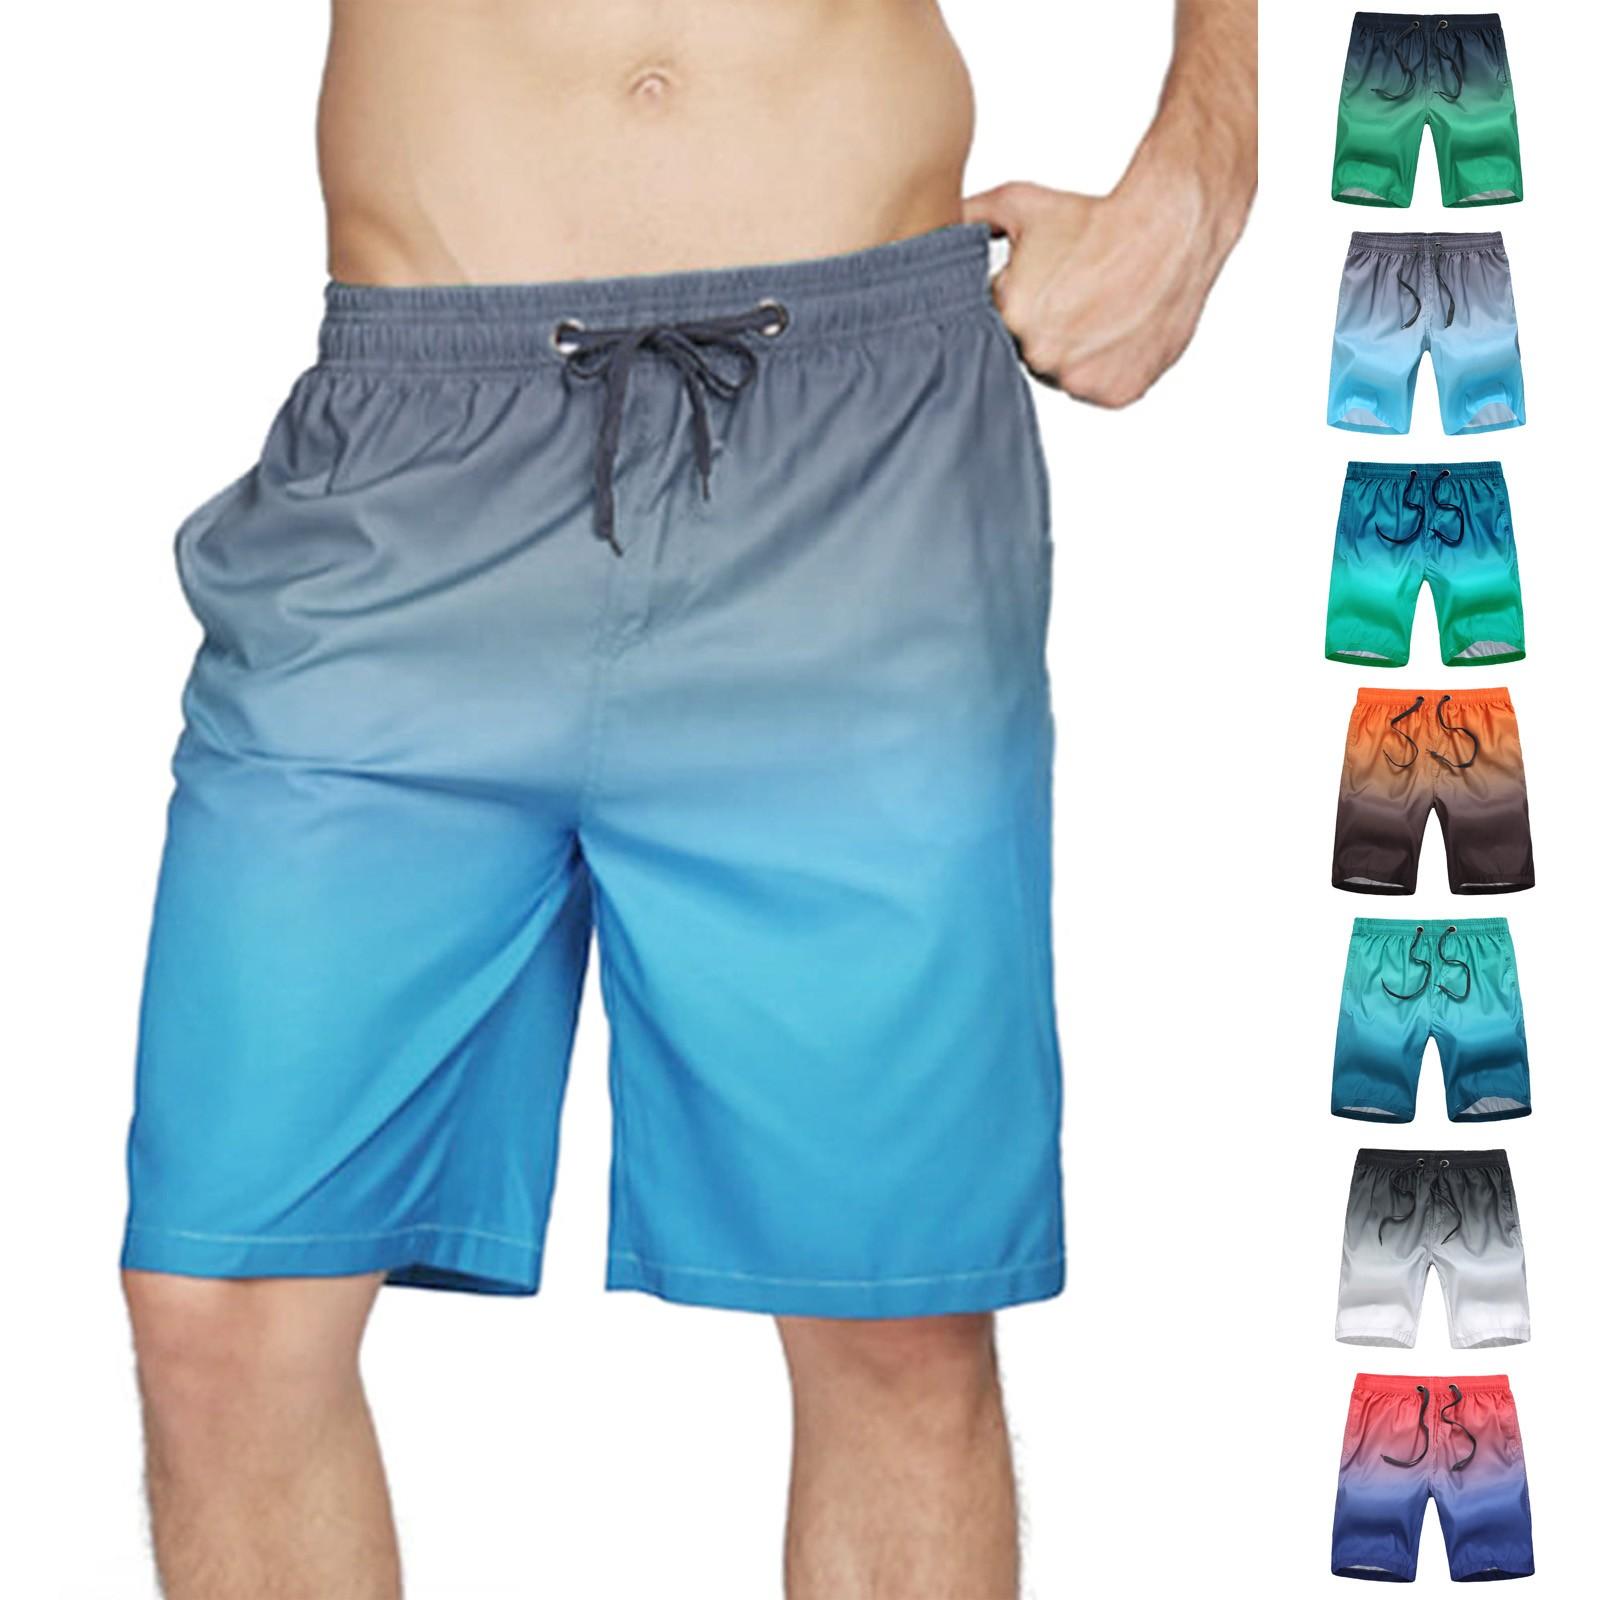 Wiwily Mens Swimming Swim Shorts Elastic Waist Pockets Surf Summer Gradient Print Tie-Dye Beach Swimwear Pool Trunks Pants